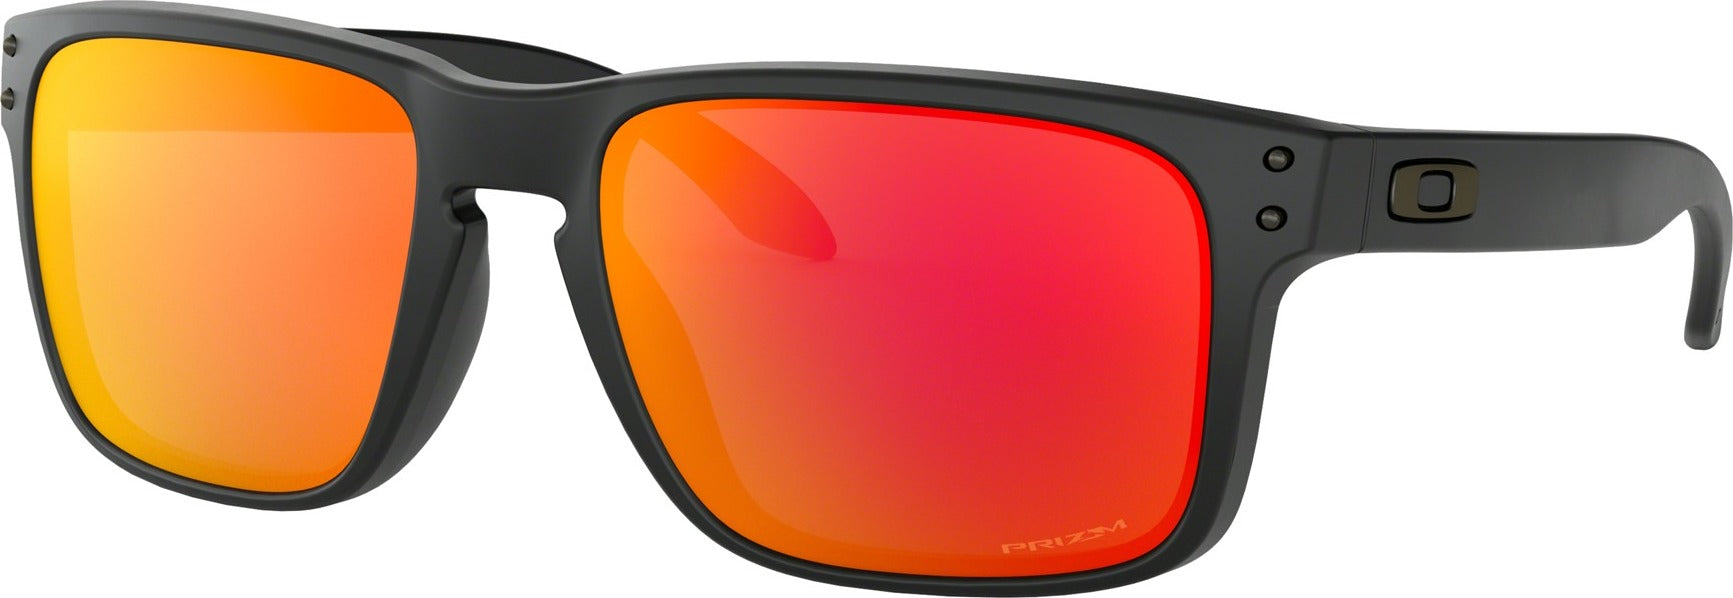 Oakley Holbrook Sunglasses - Matte Black - Prizm Ruby Lens | Altitude Sports